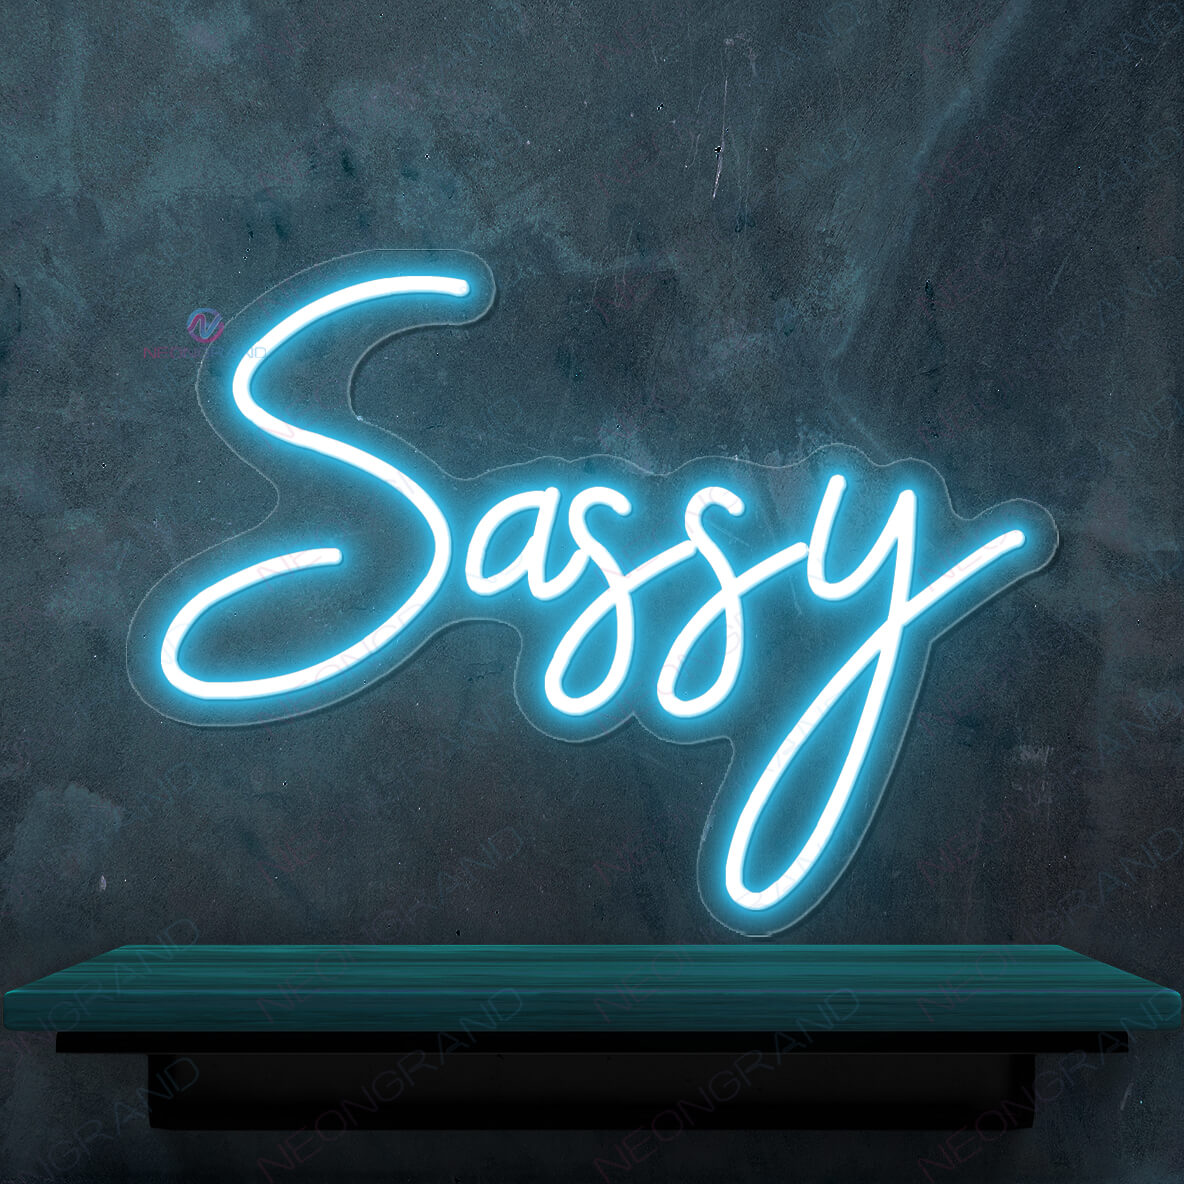 Sassy Neon Sign Stay Sassy Neon Party Led Light light blue